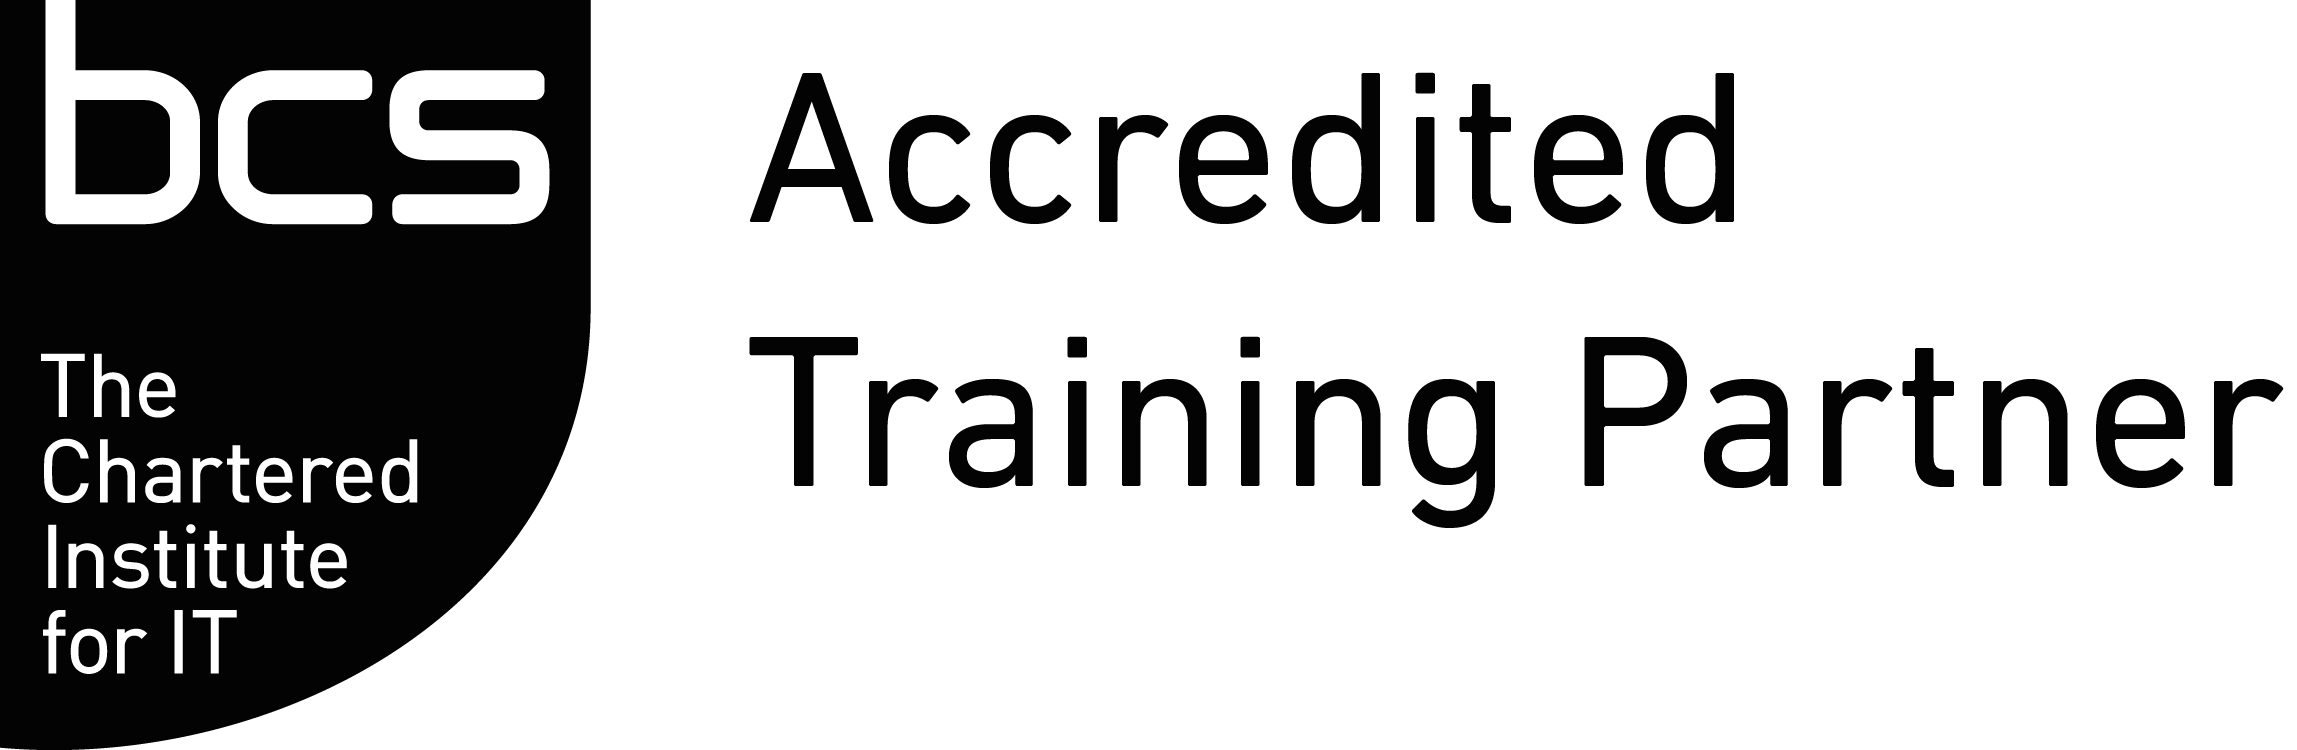 BCS Accredited training partner